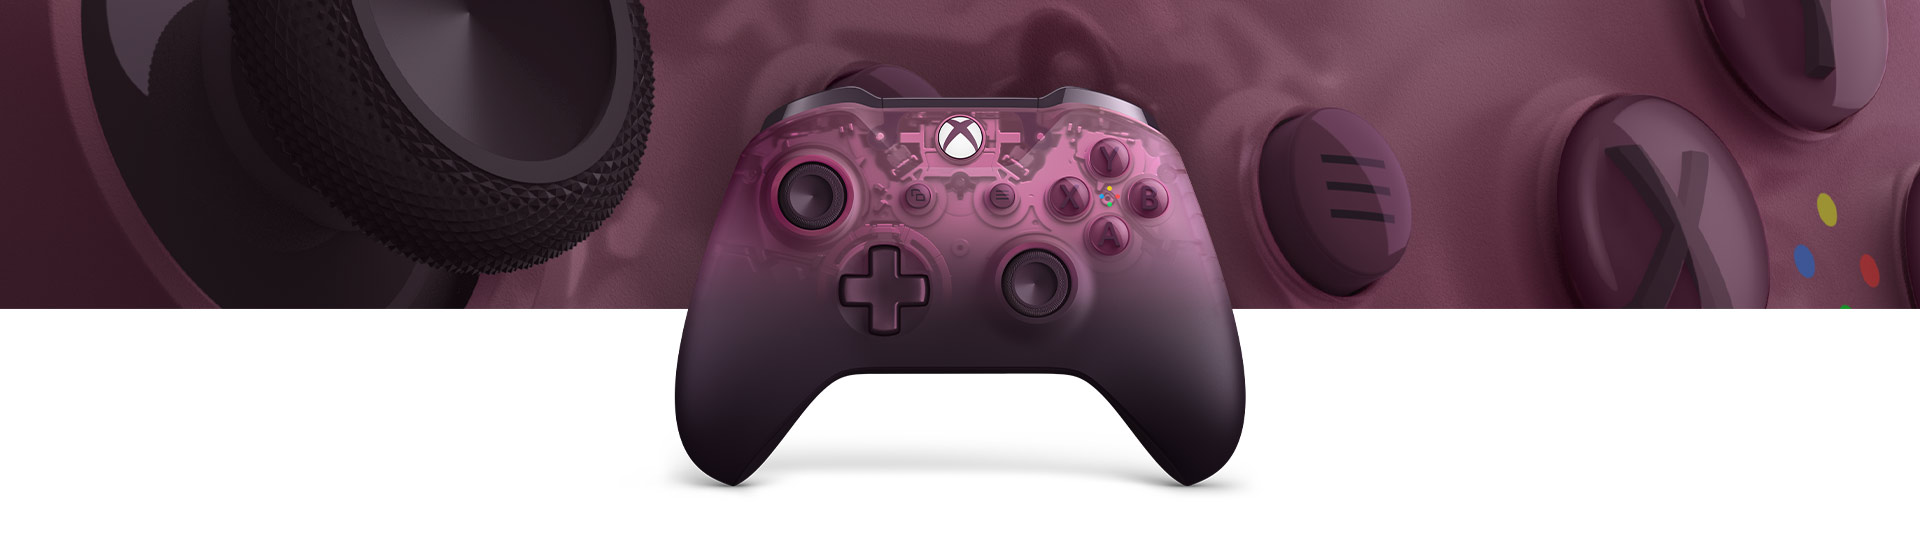 Bezdrátový ovladač Xbox – speciální edice Phantom Magenta s detailním pohledem na texturu povrchu ovladače